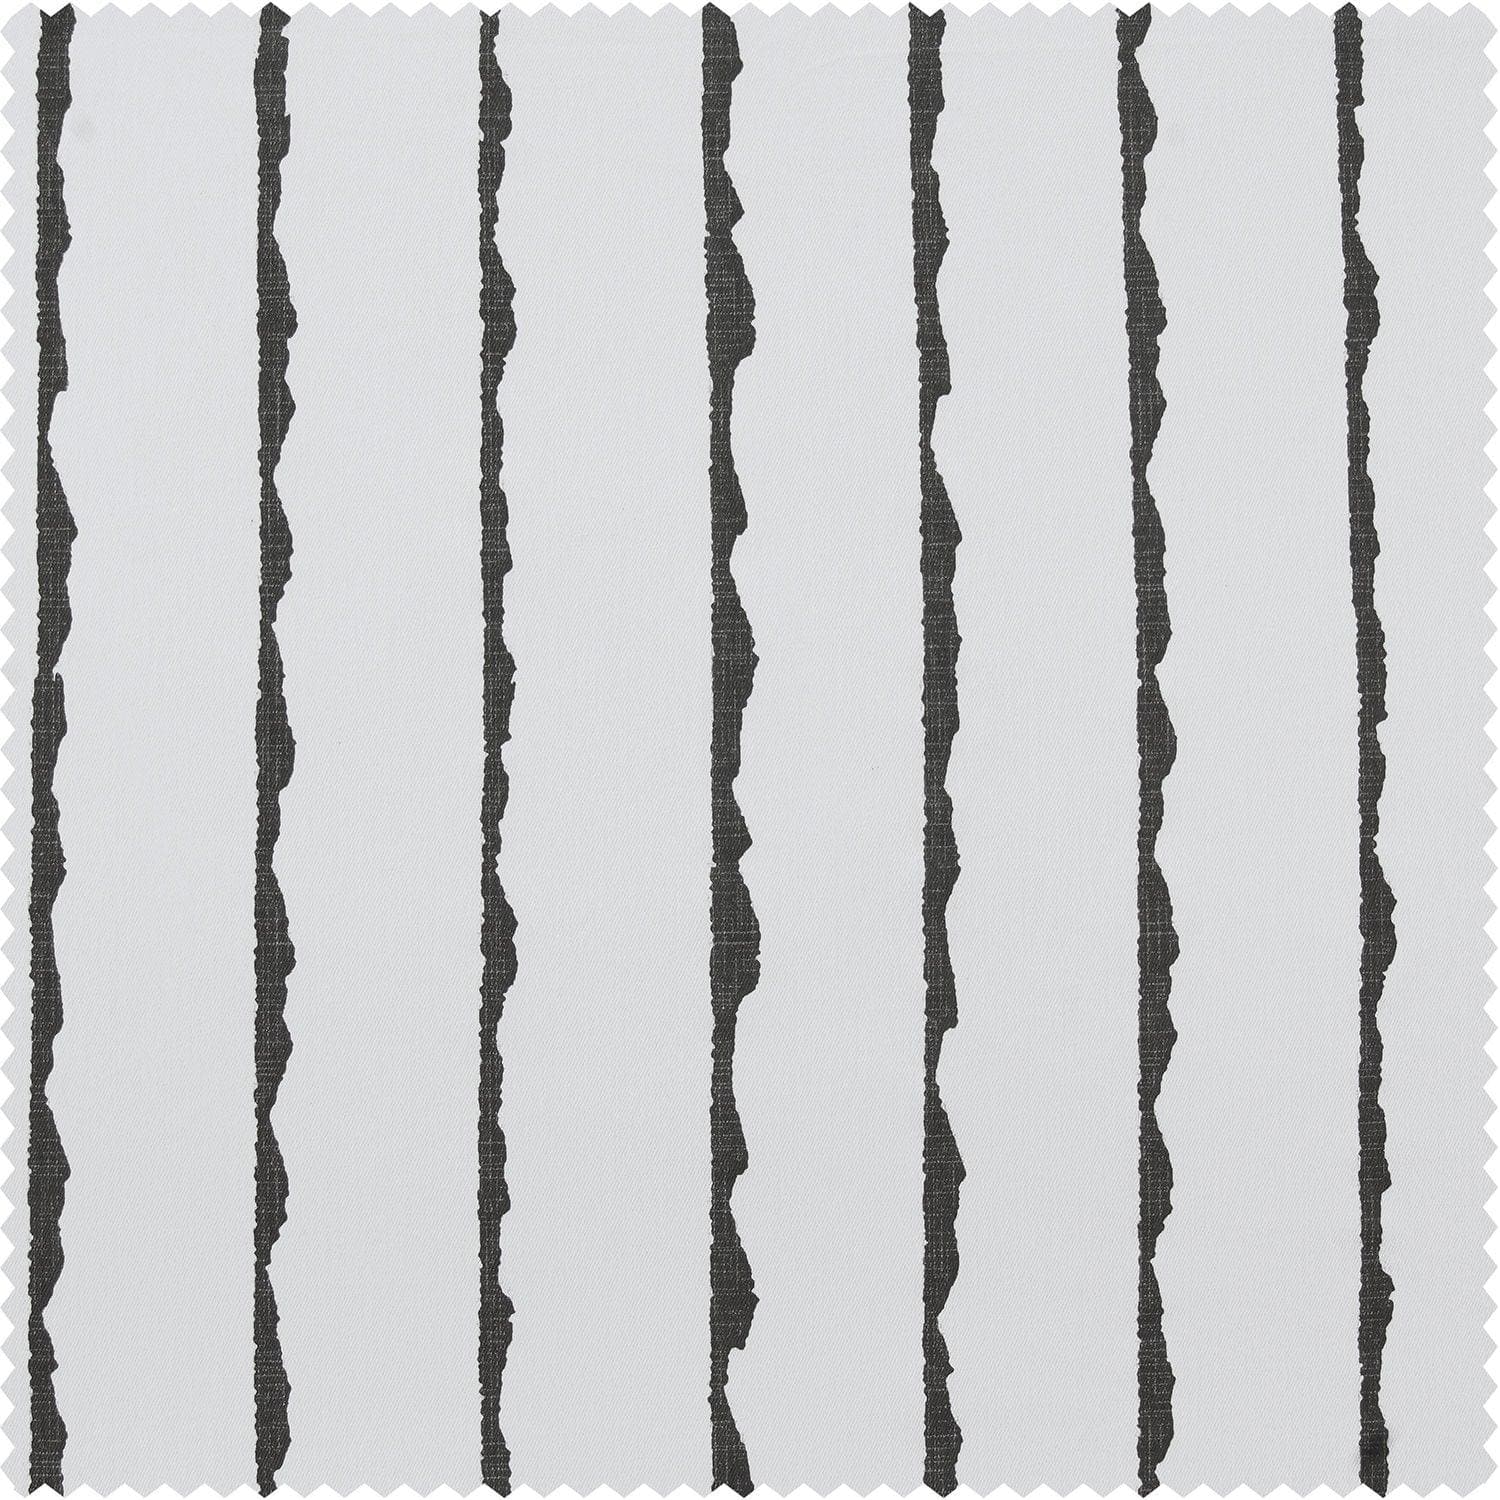 Sharkskin Black Striped Printed Cotton Curtain